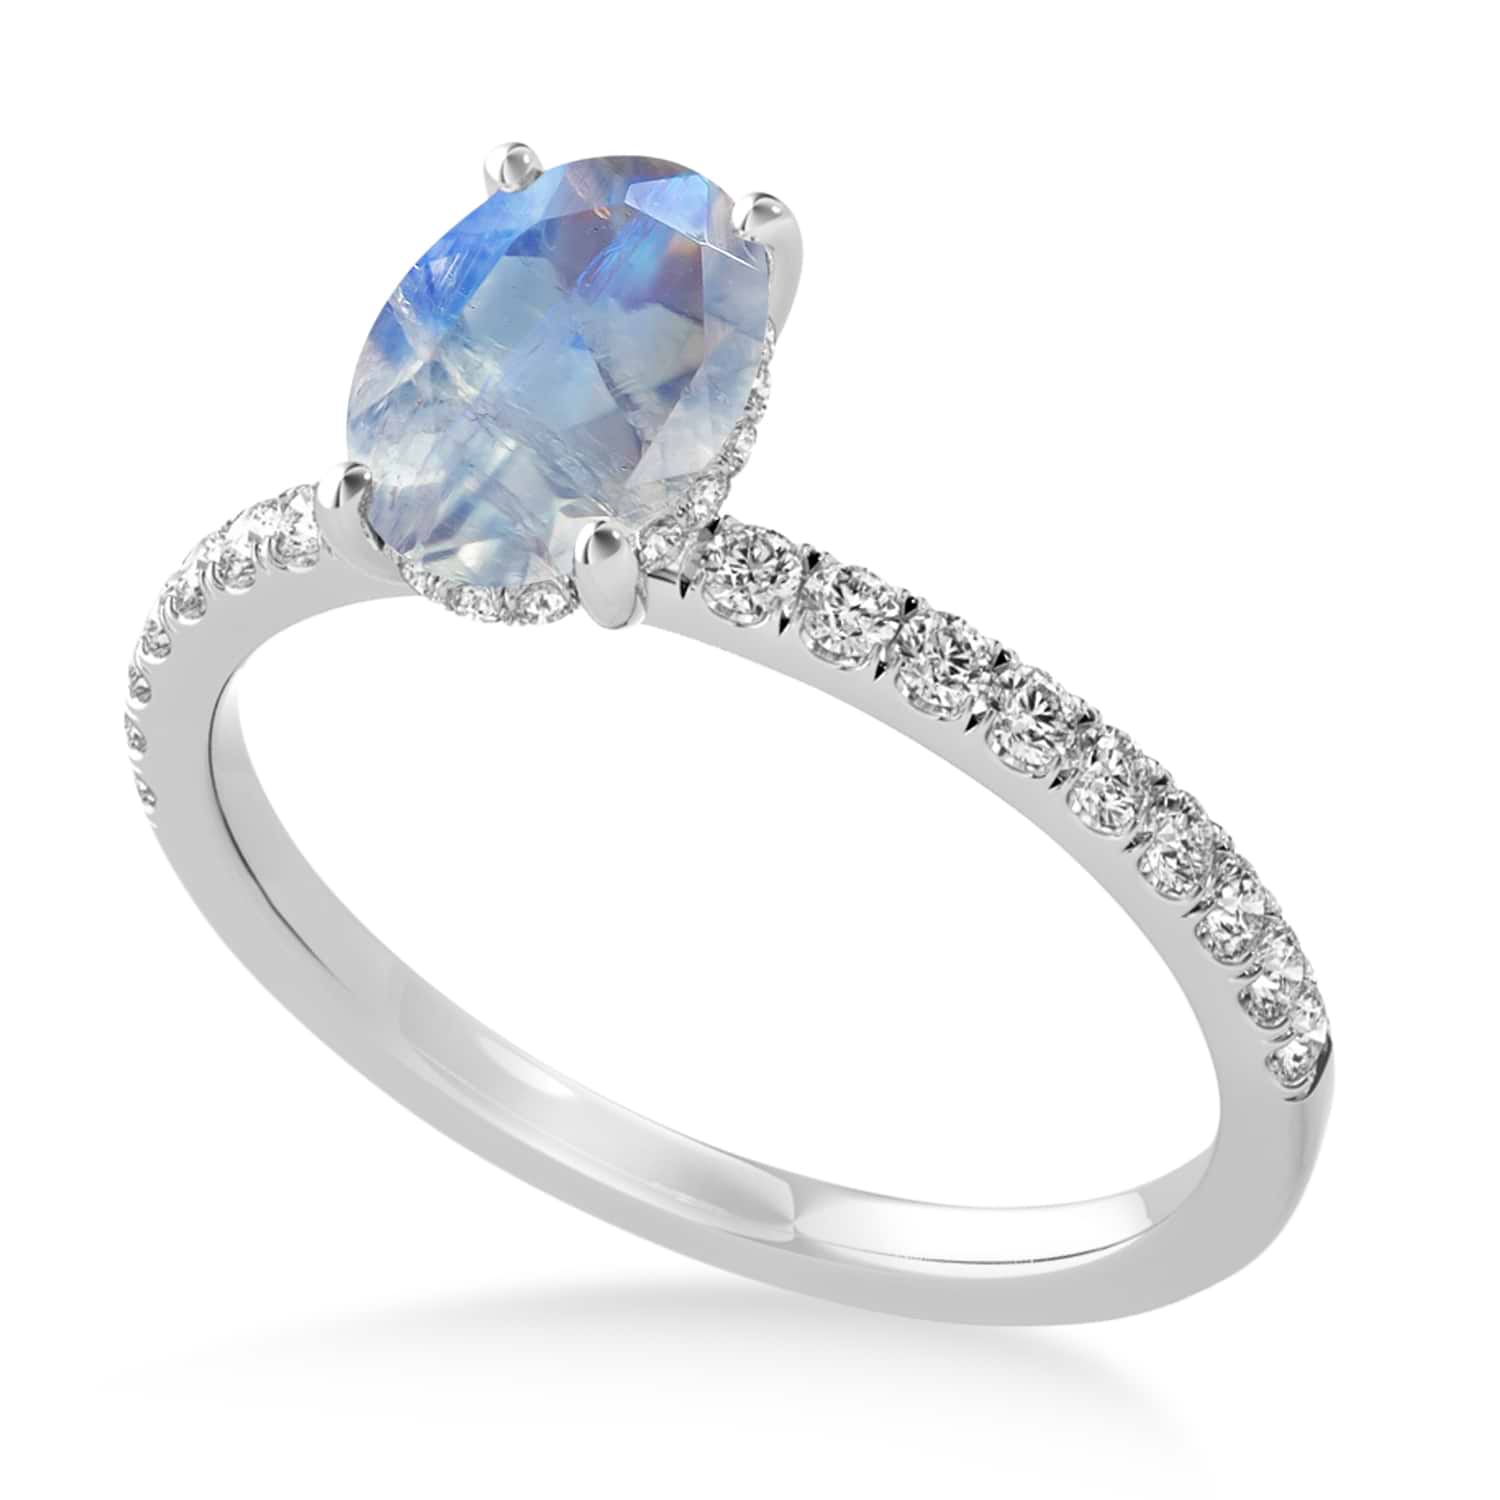 Oval Moonstone & Diamond Single Row Hidden Halo Engagement Ring 14k White Gold (0.68ct)